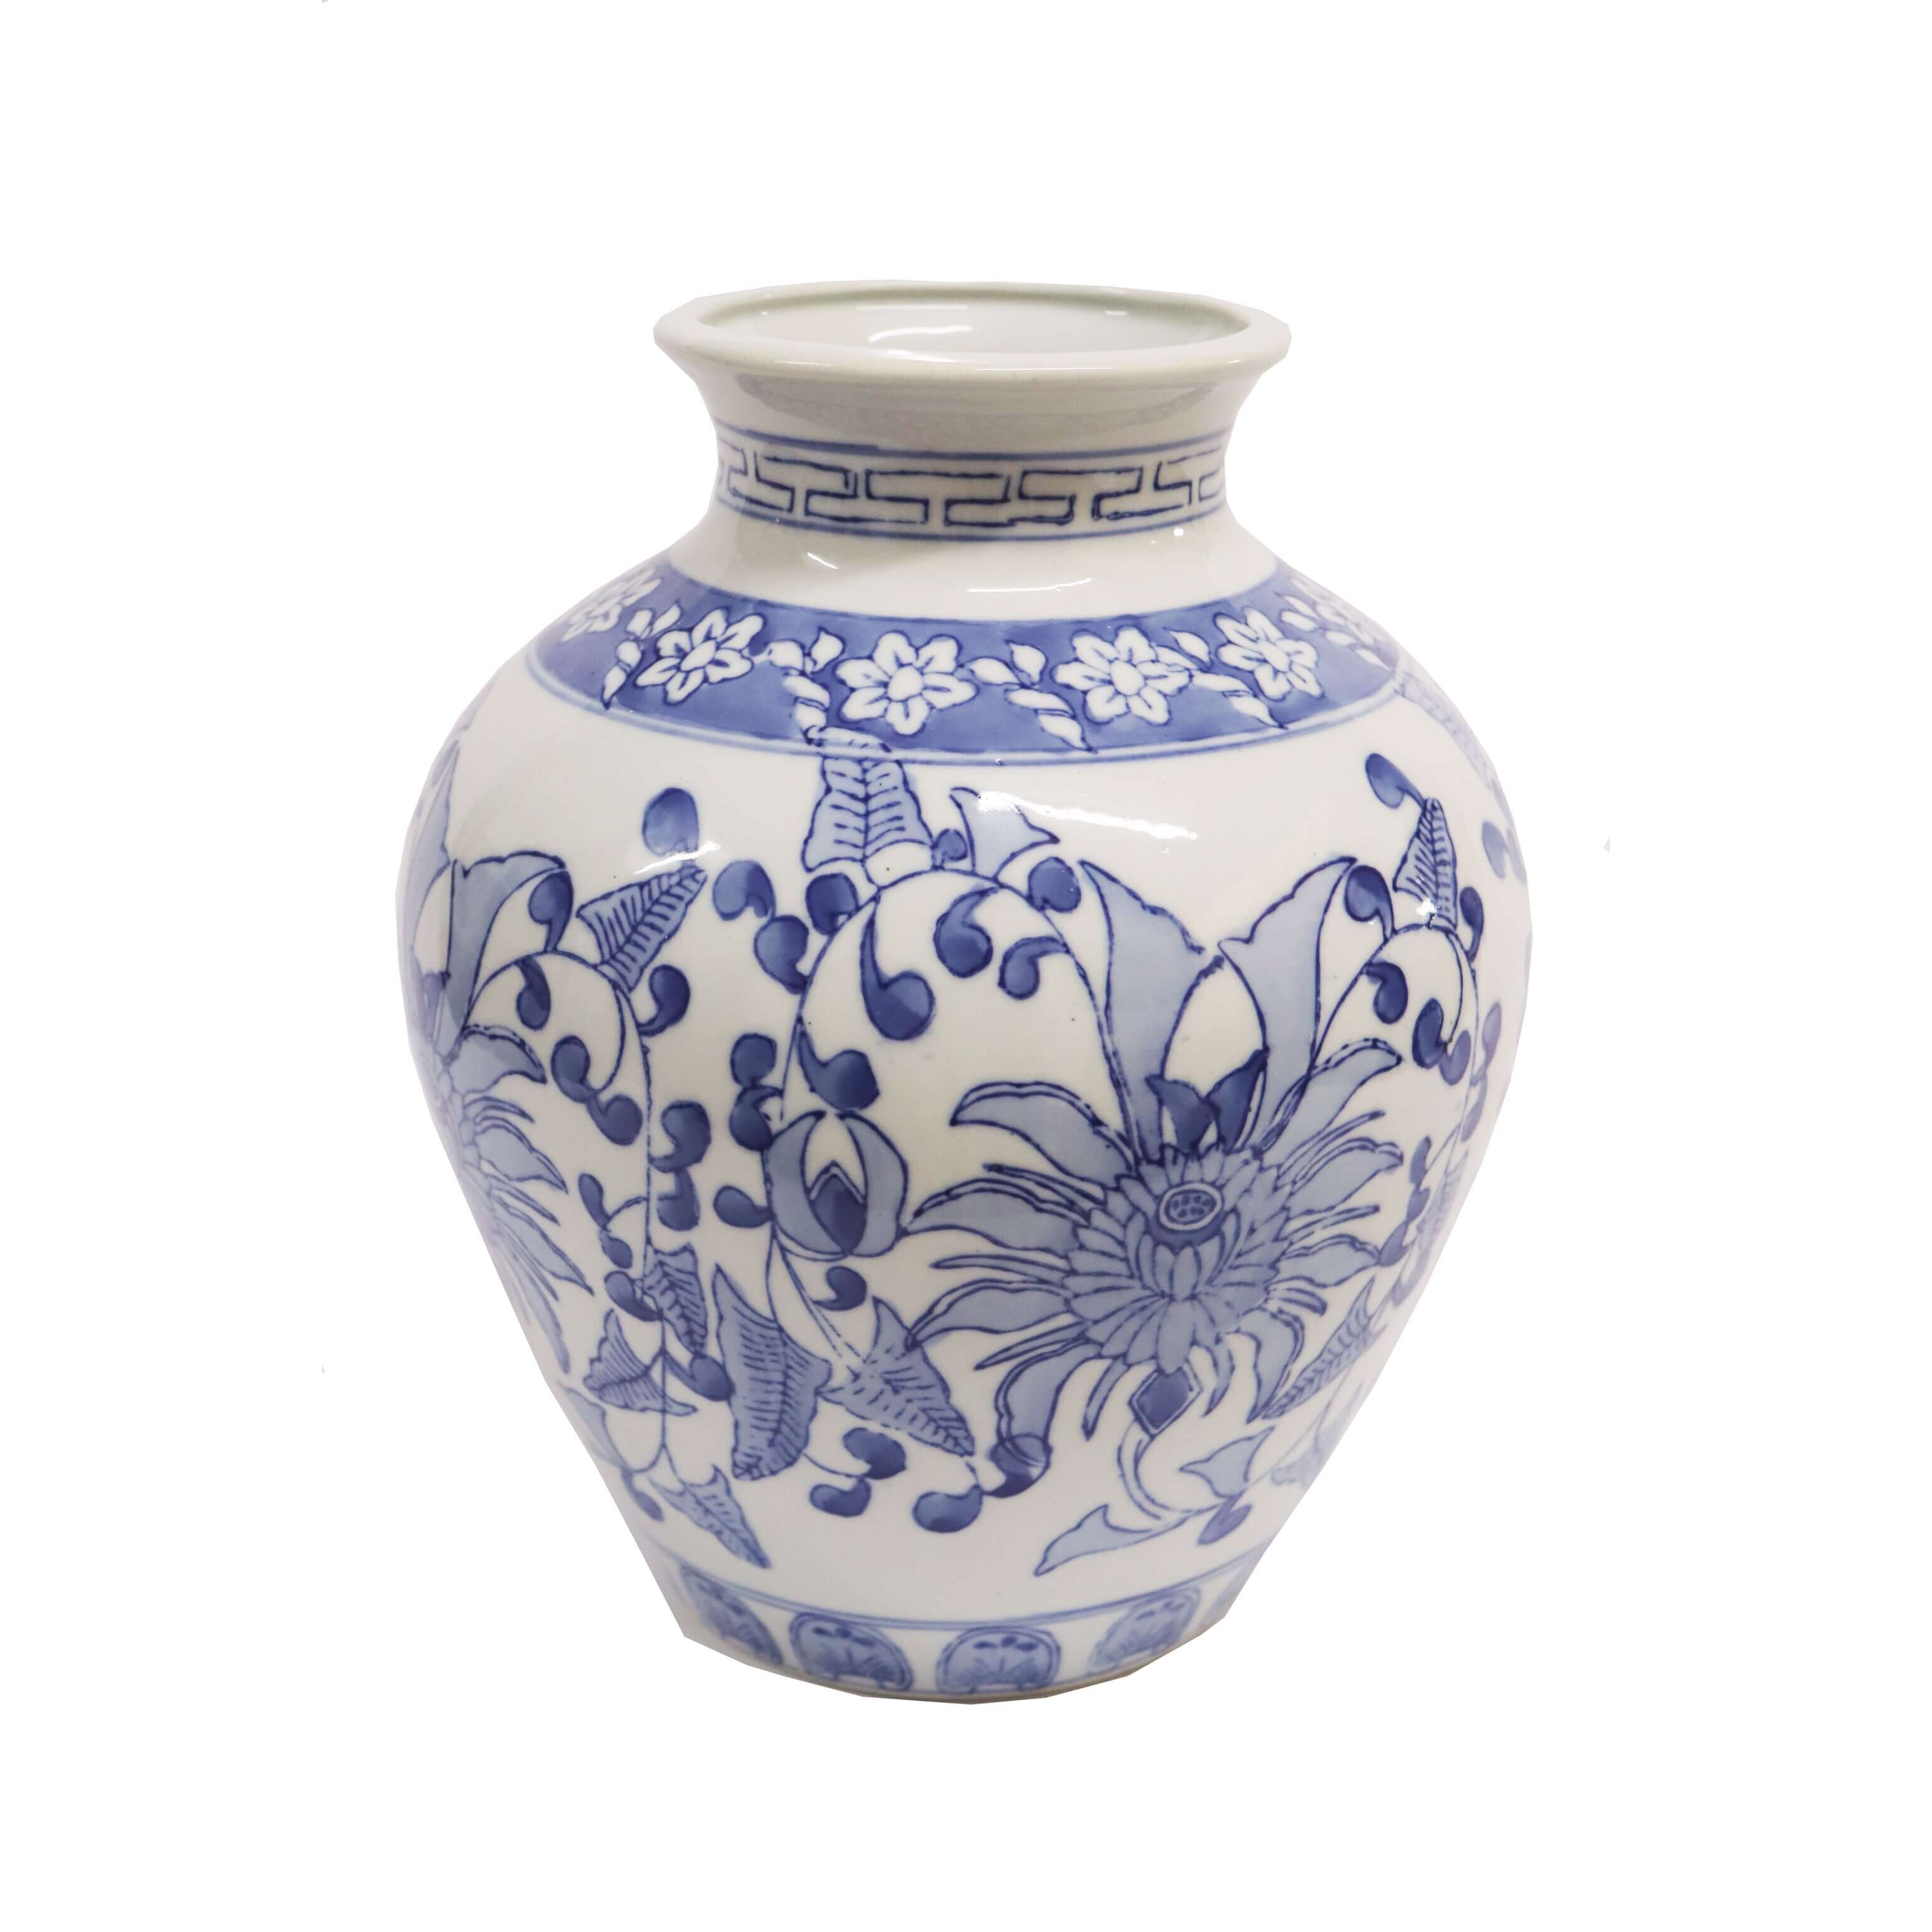 Jarrón chino porcelana - mundo Antiguo